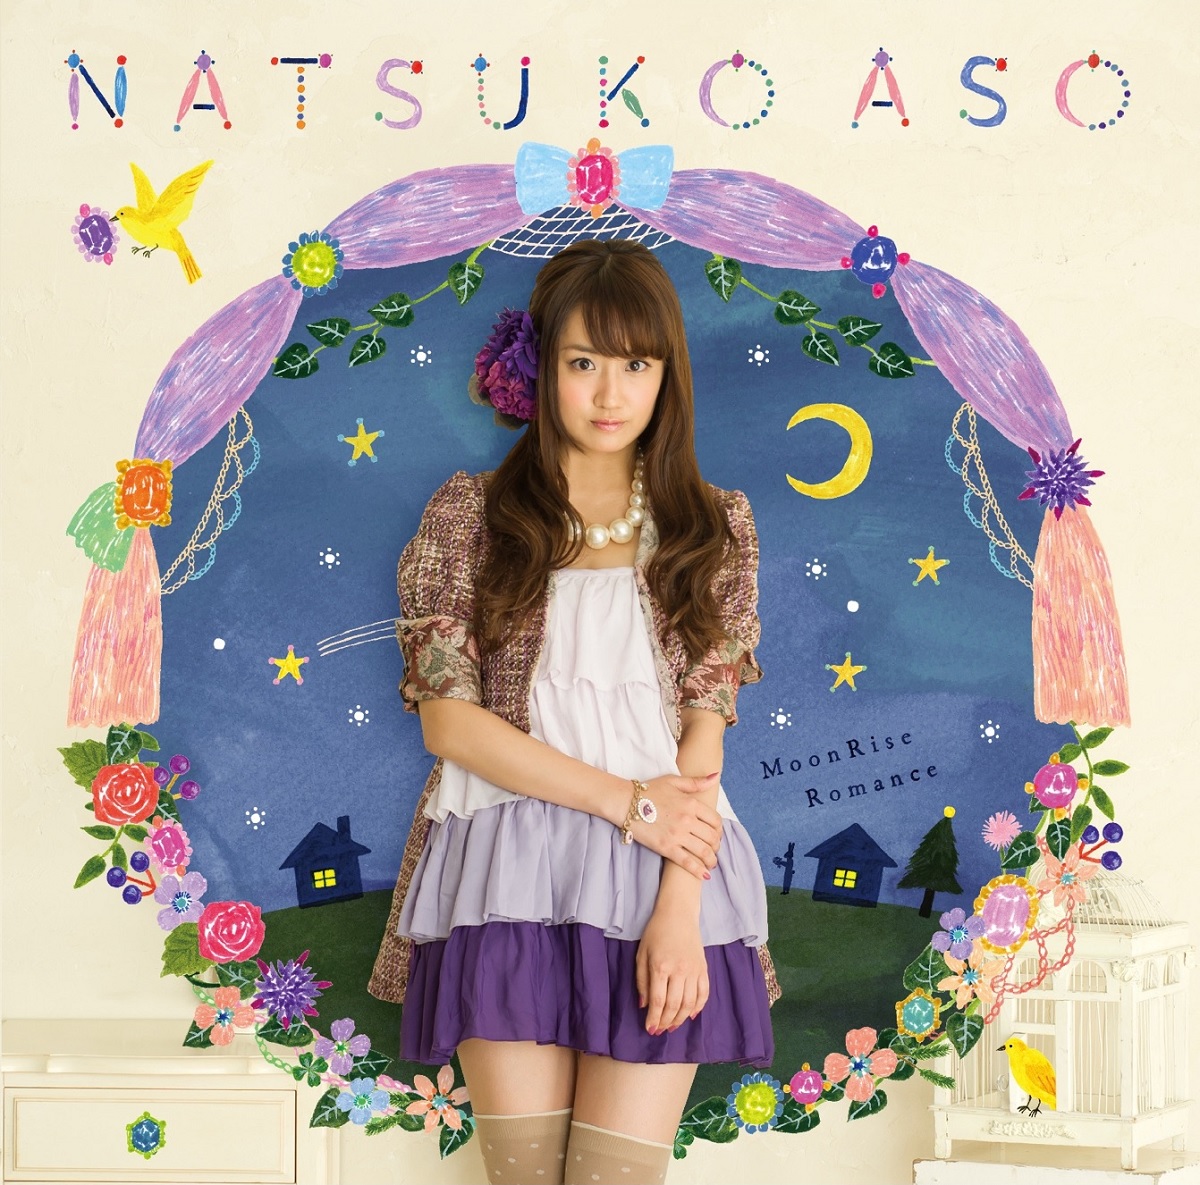 Cover art for『Natsuko Aso - MoonRise Romance』from the release『MoonRise Romance』